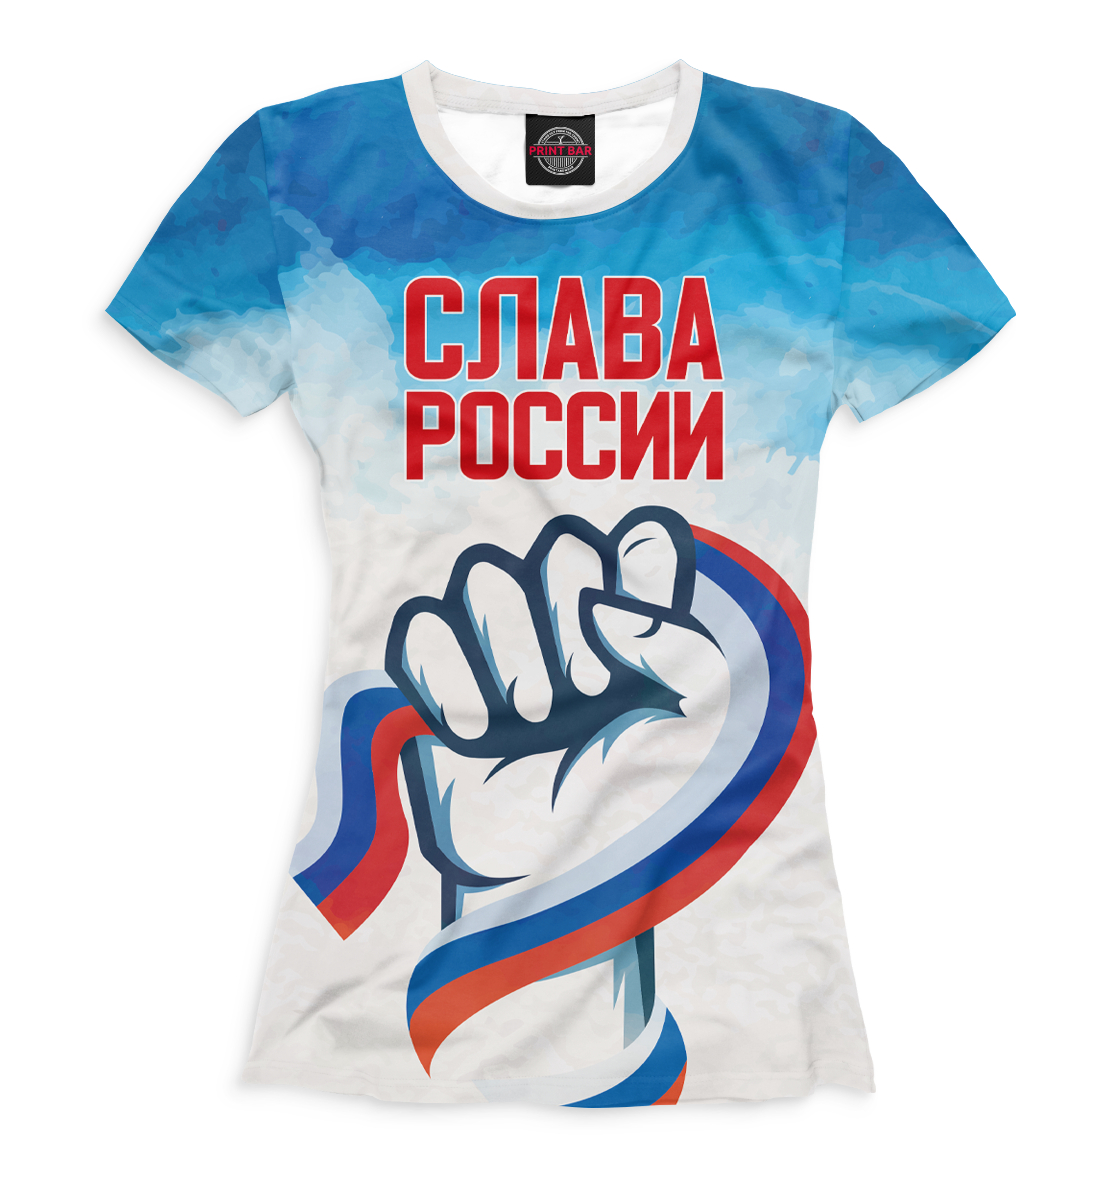 Футболка Слава России для девочек, артикул: VSY-890318-fut-1mp